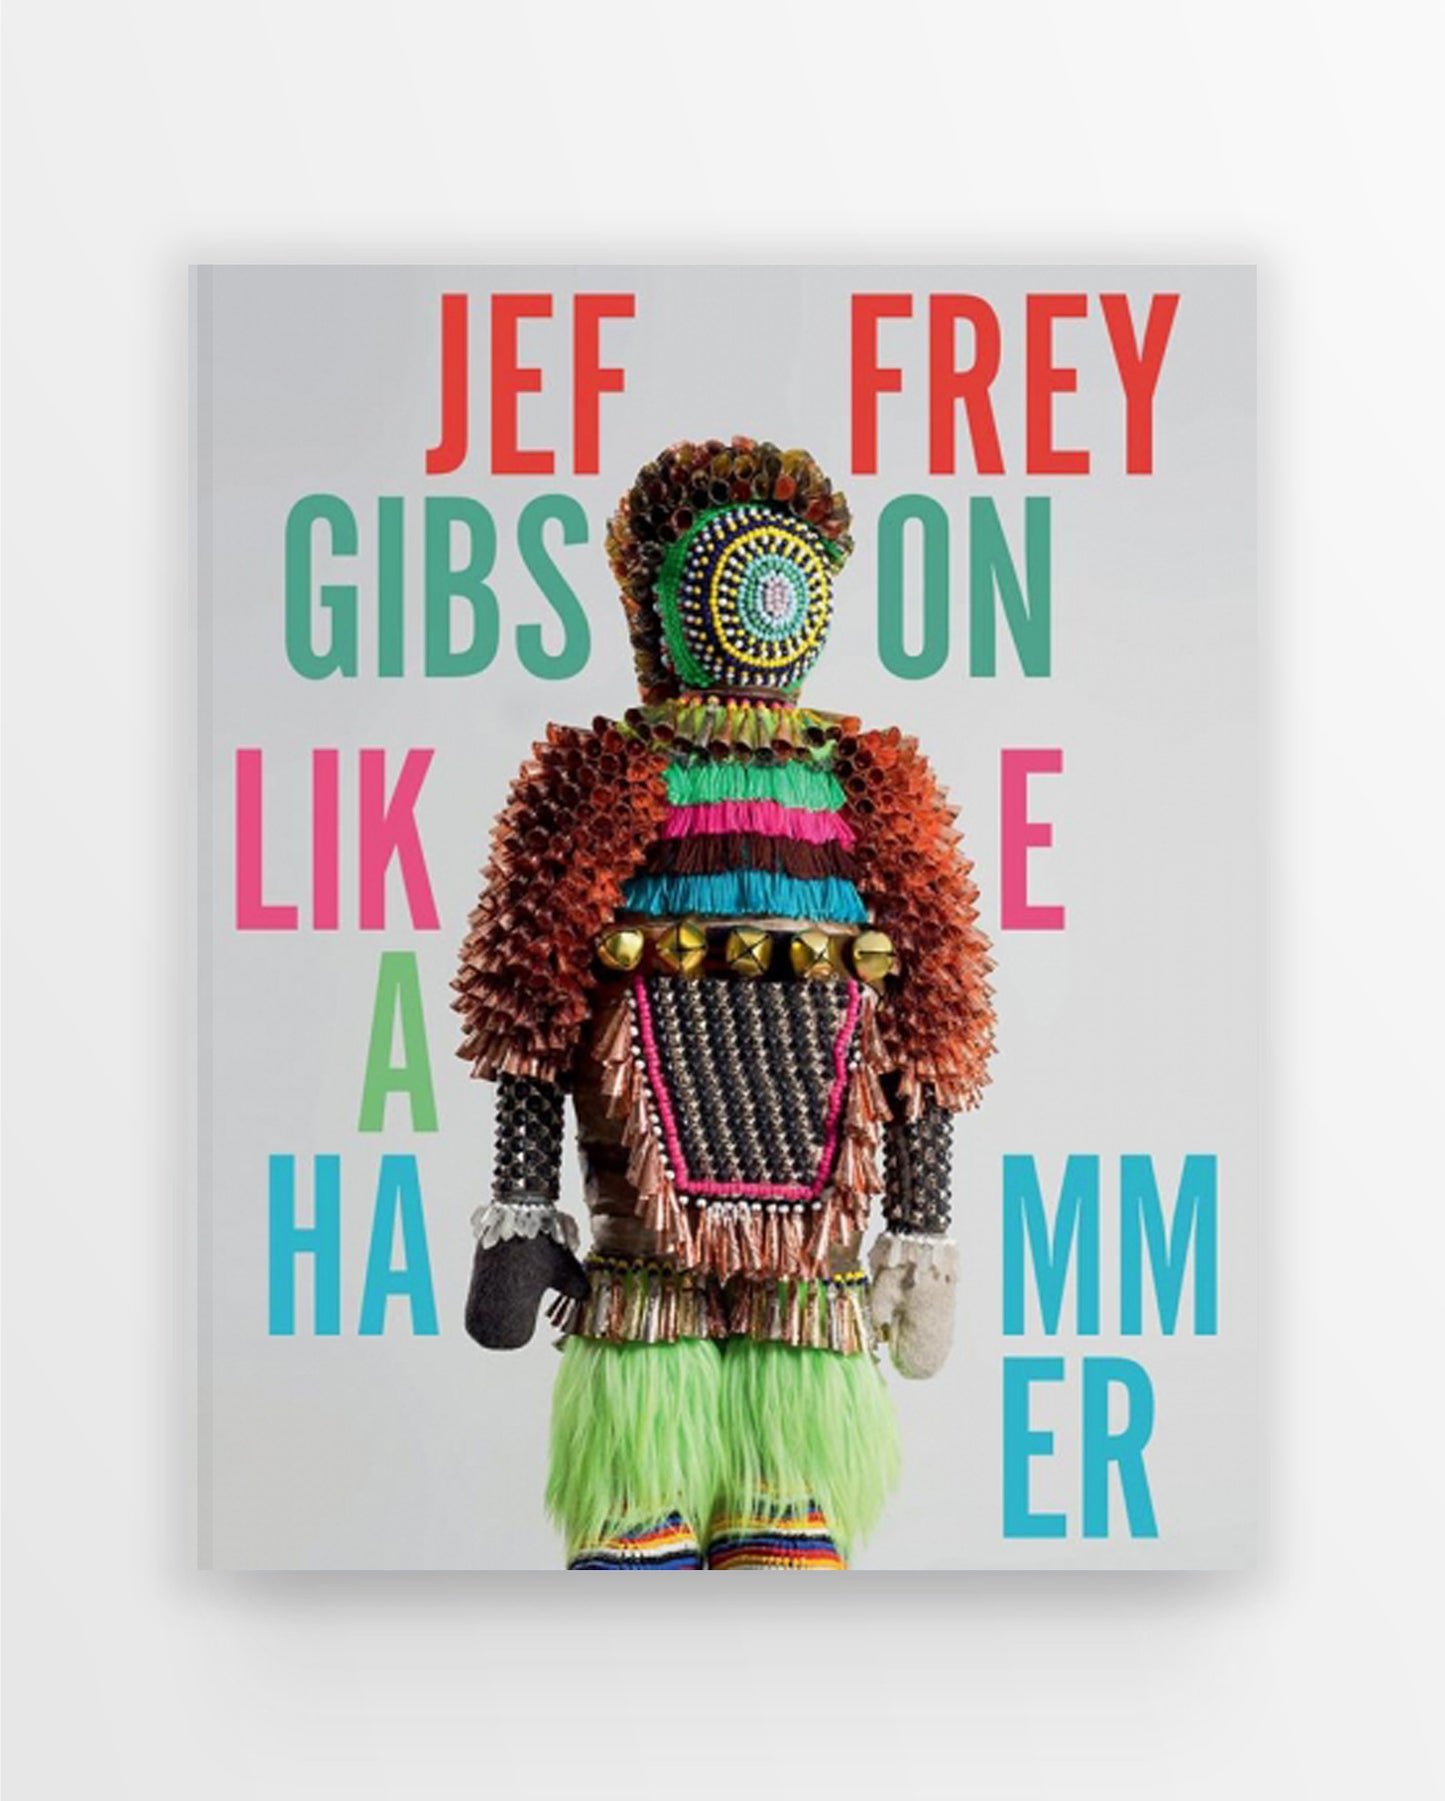 Jeffrey Gibson: Like a Hammer